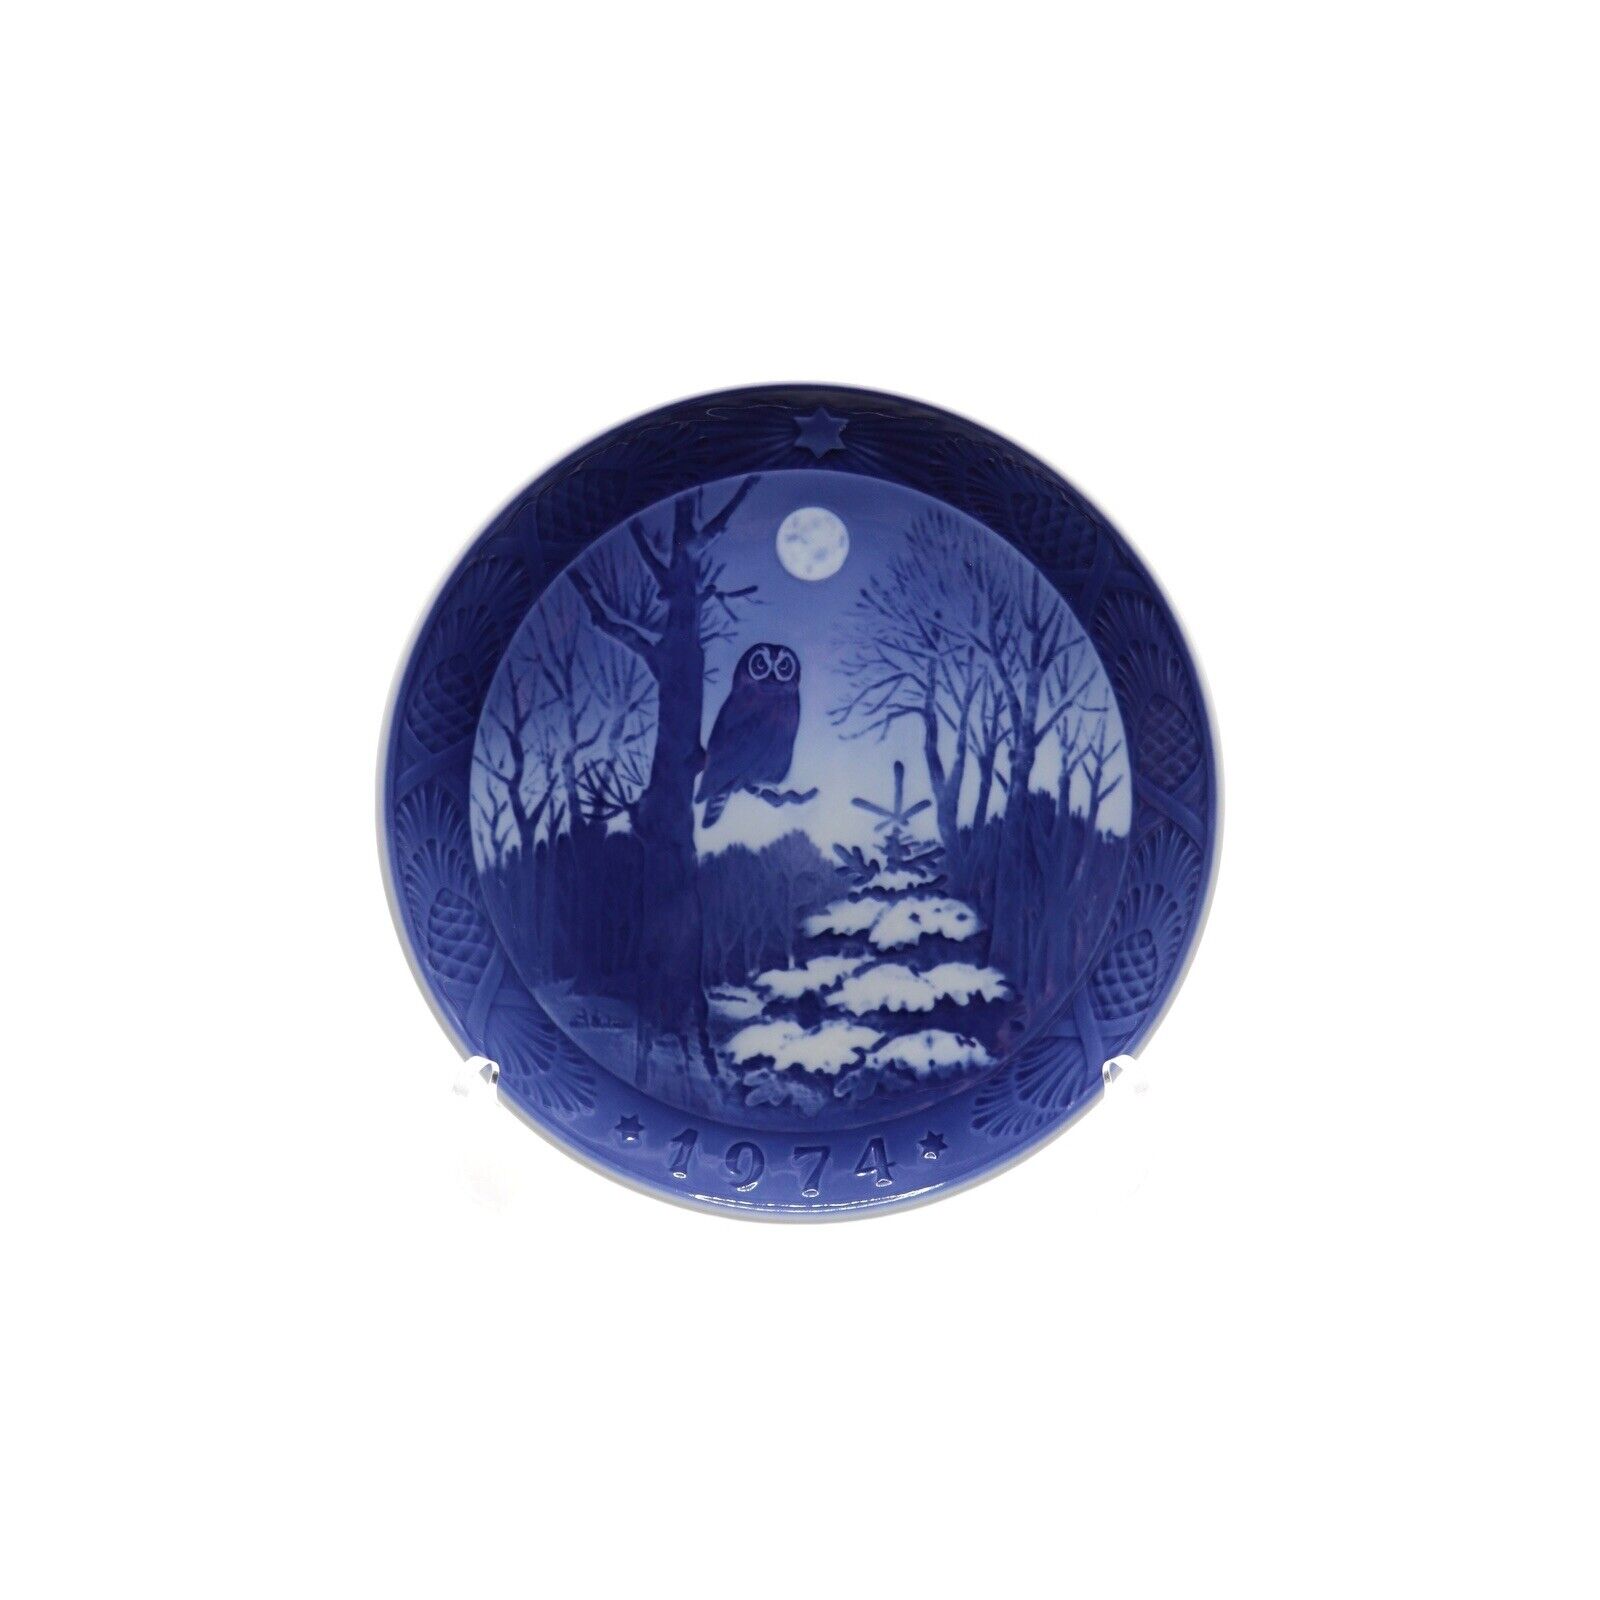 Royal Copenhagen “Winter Twilight” 1974 Decorative Collector Plate